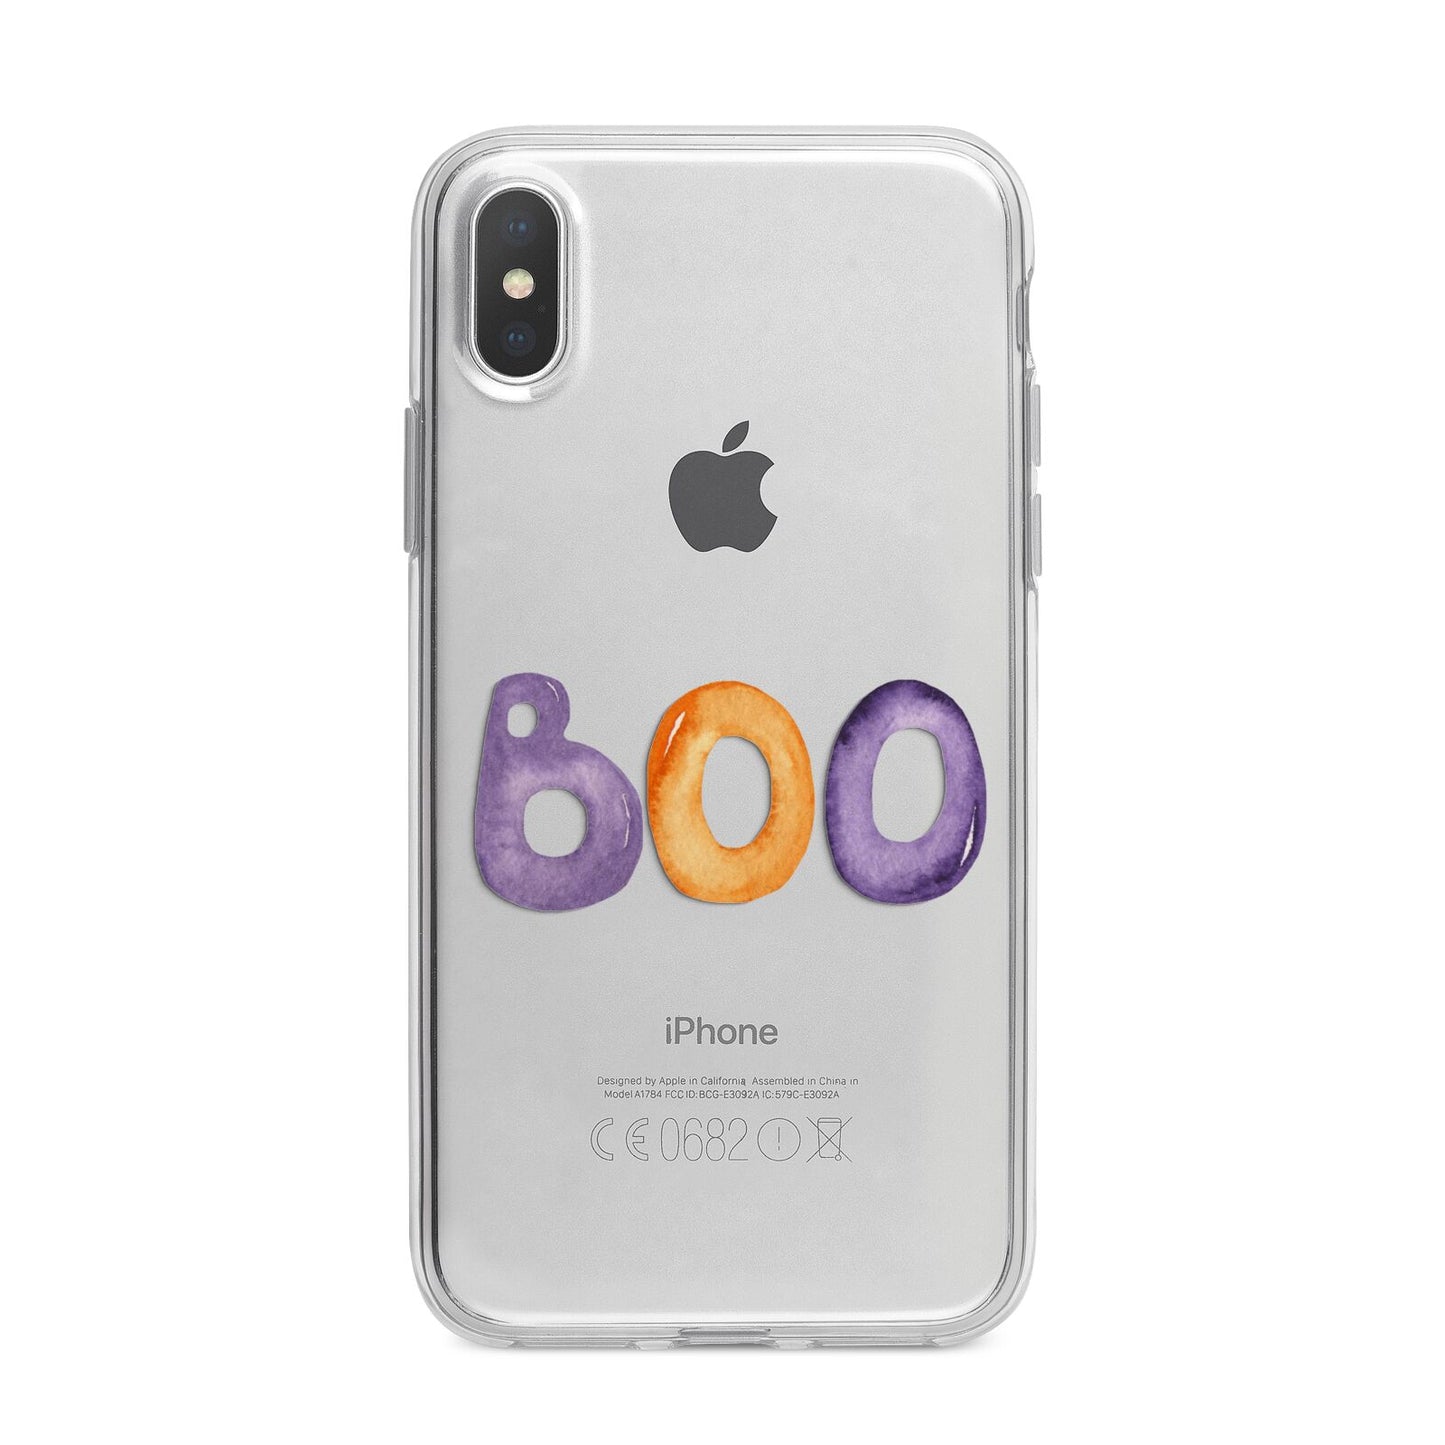 Boo iPhone X Bumper Case on Silver iPhone Alternative Image 1